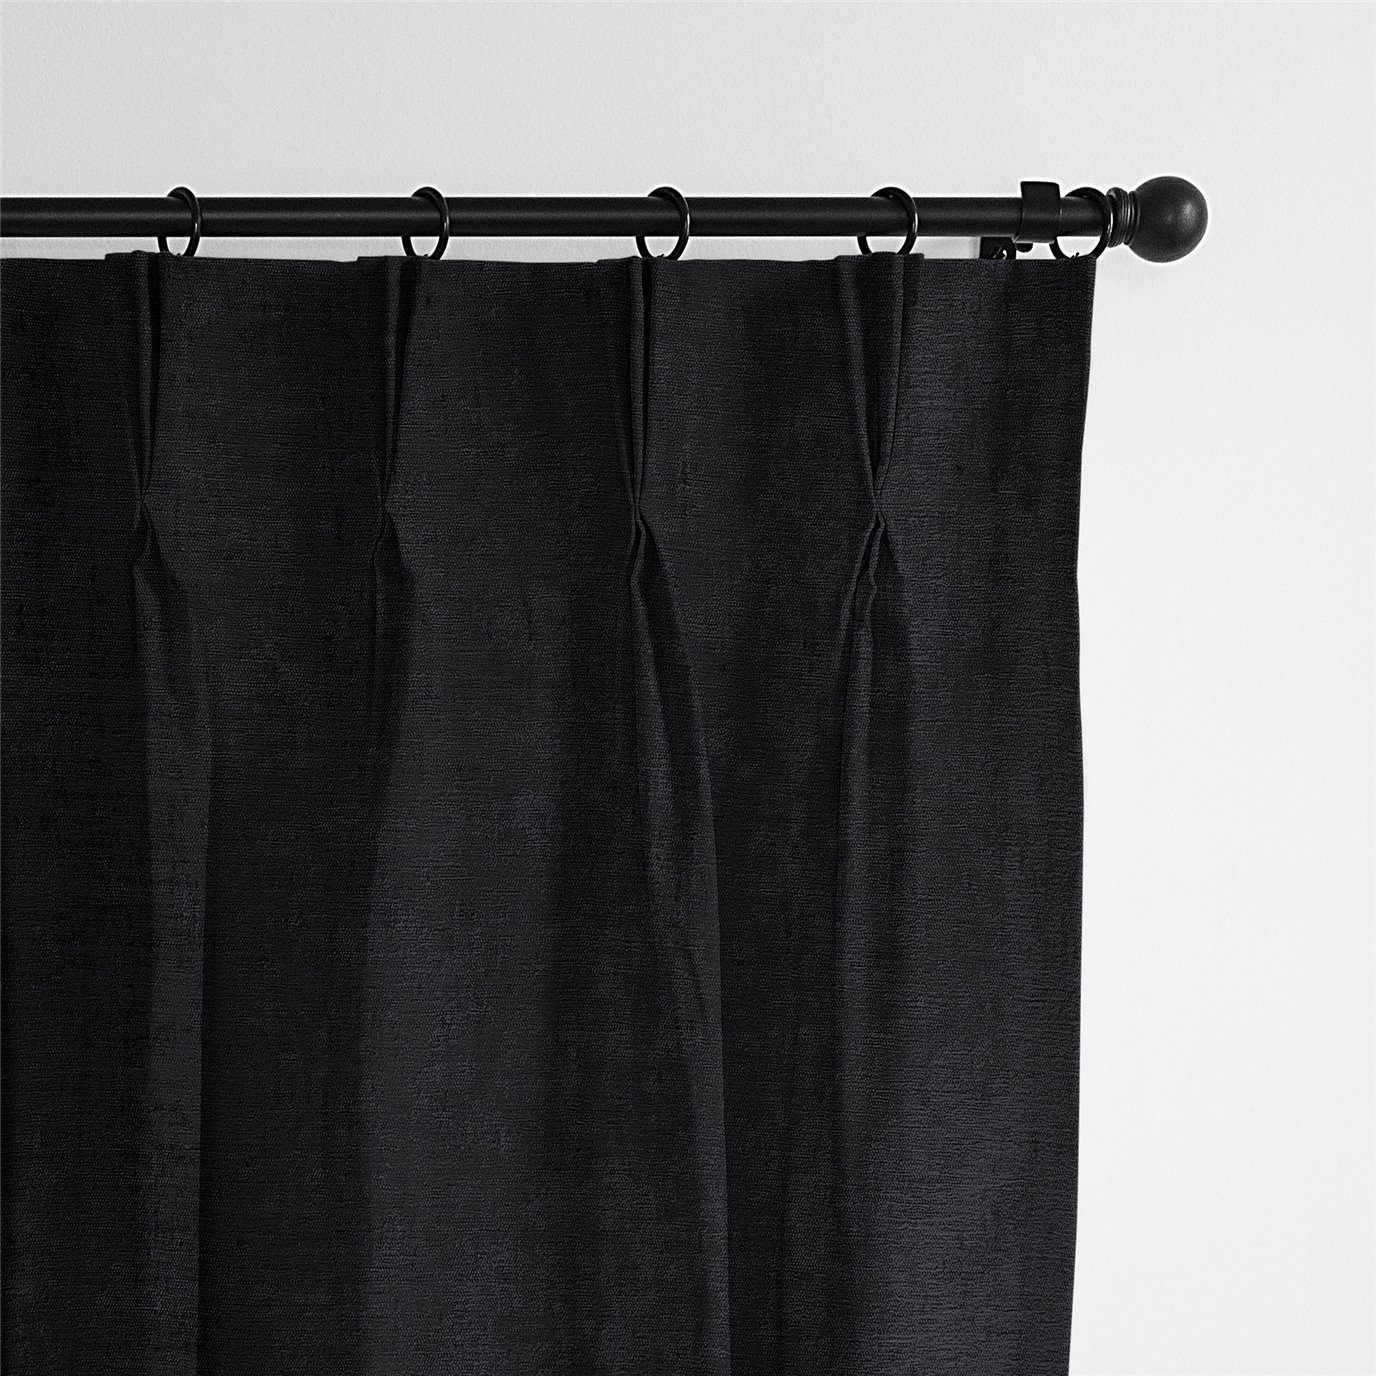 Juno Velvet Black Pinch Pleat Drapery Panel - Pair - Size 20"x108"